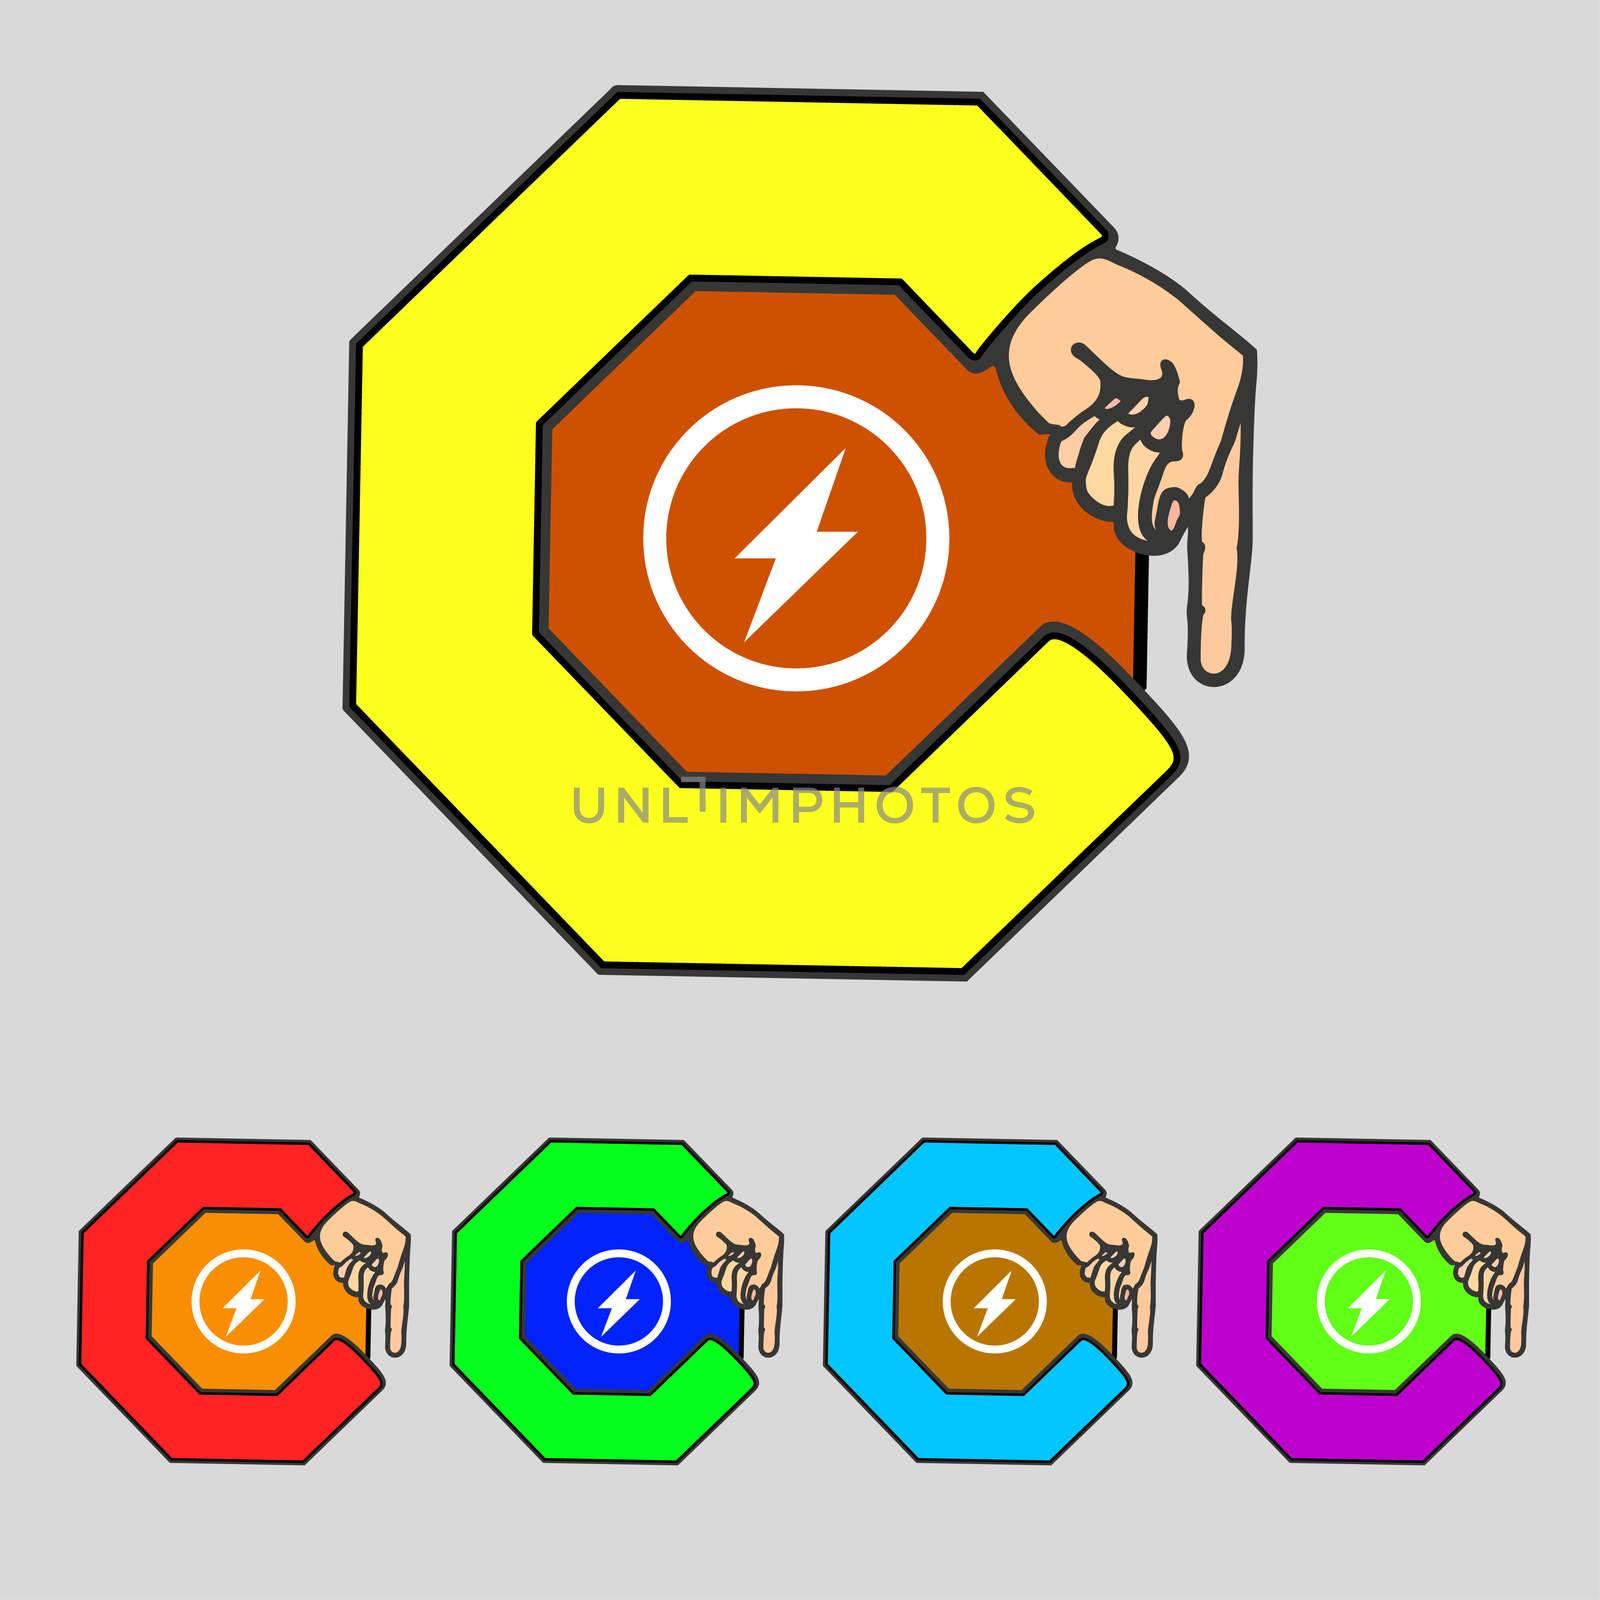 Photo flash sign icon. Lightning symbol. Set colourful buttons. illustration